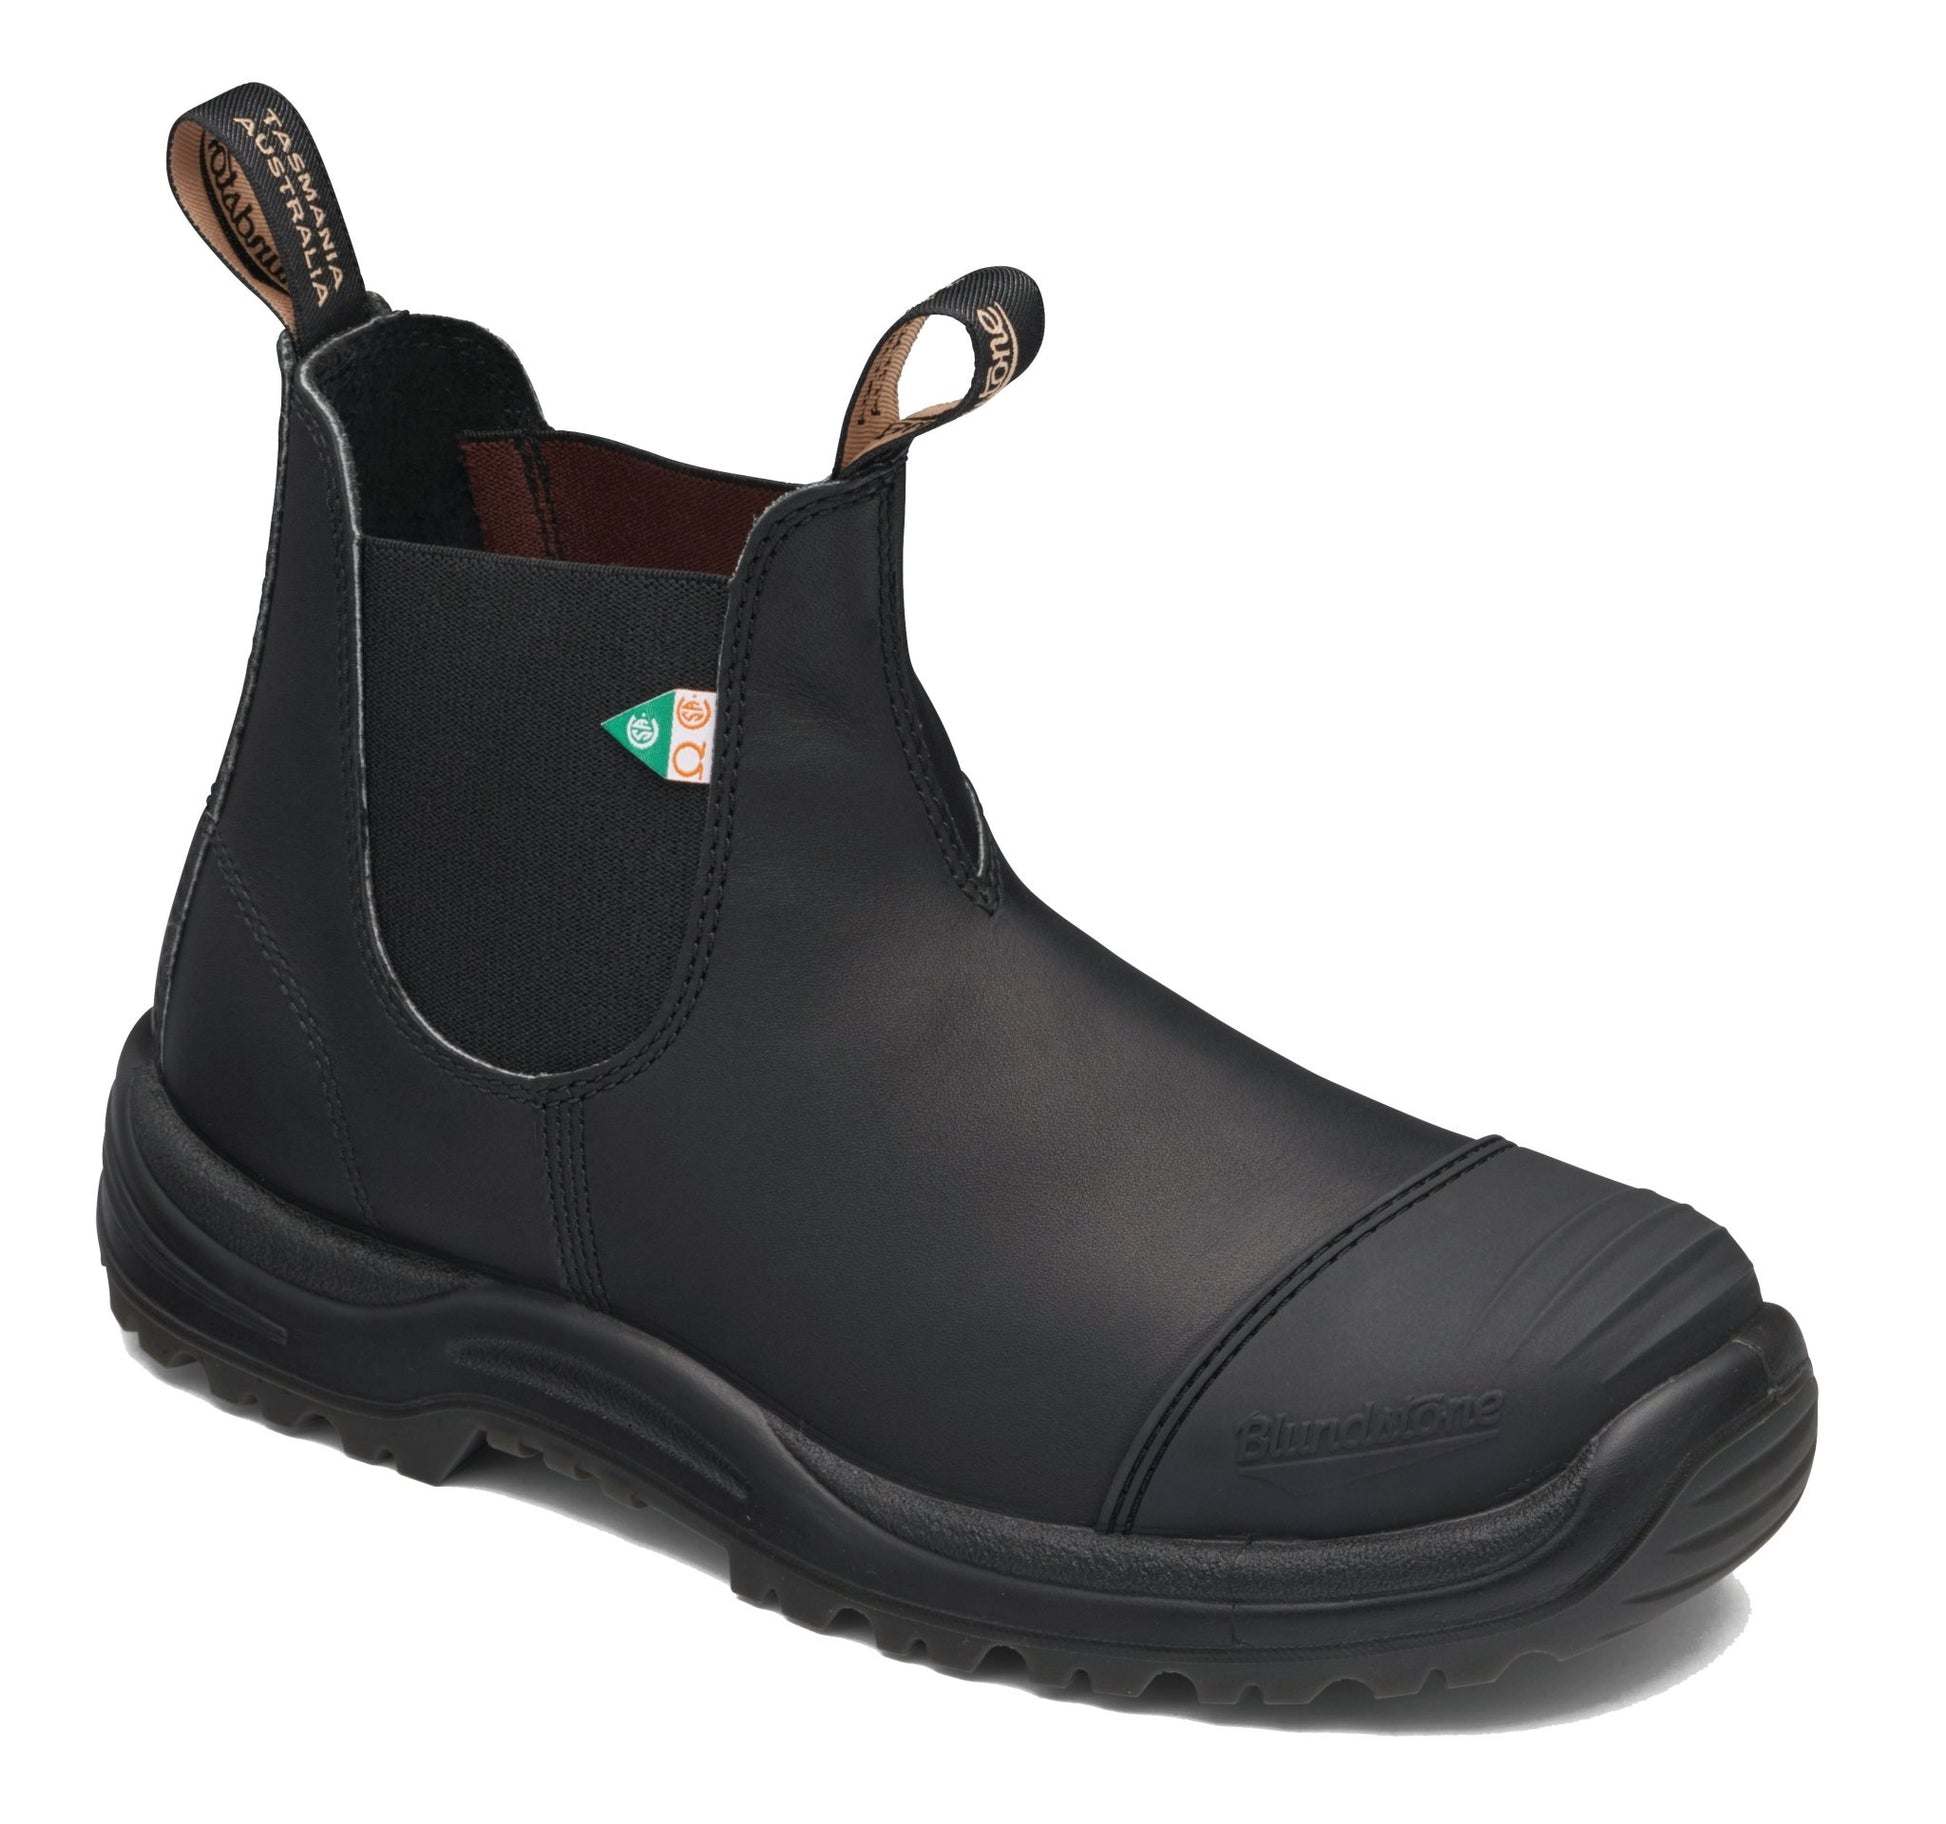 Blundstone 168 CSA Rubber Toe Black - Grady’s Feet Essentials - Blundstone